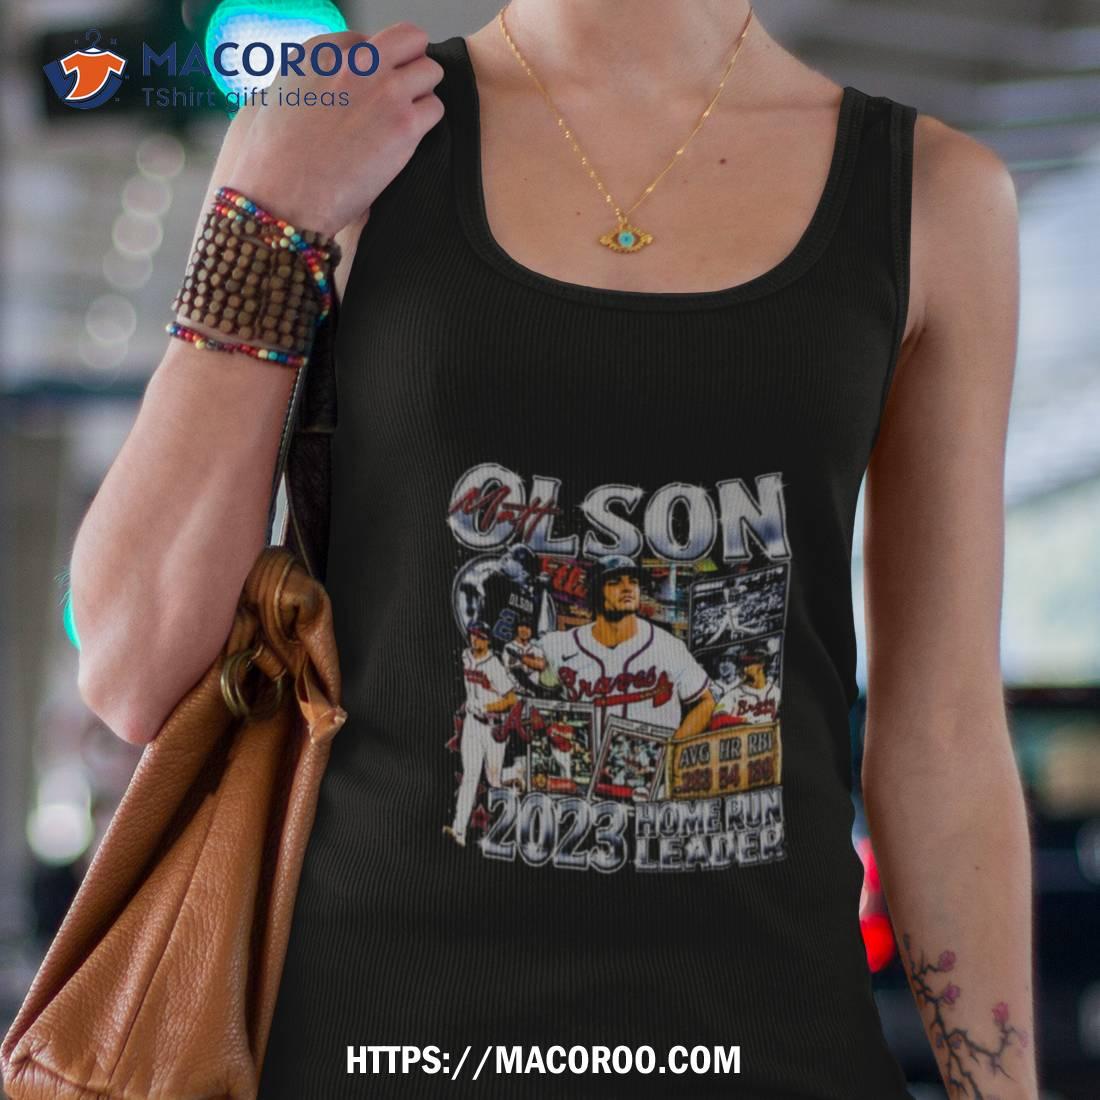 Matt Olson Jerseys, Matt Olson Shirt, Matt Olson Gear & Merchandise